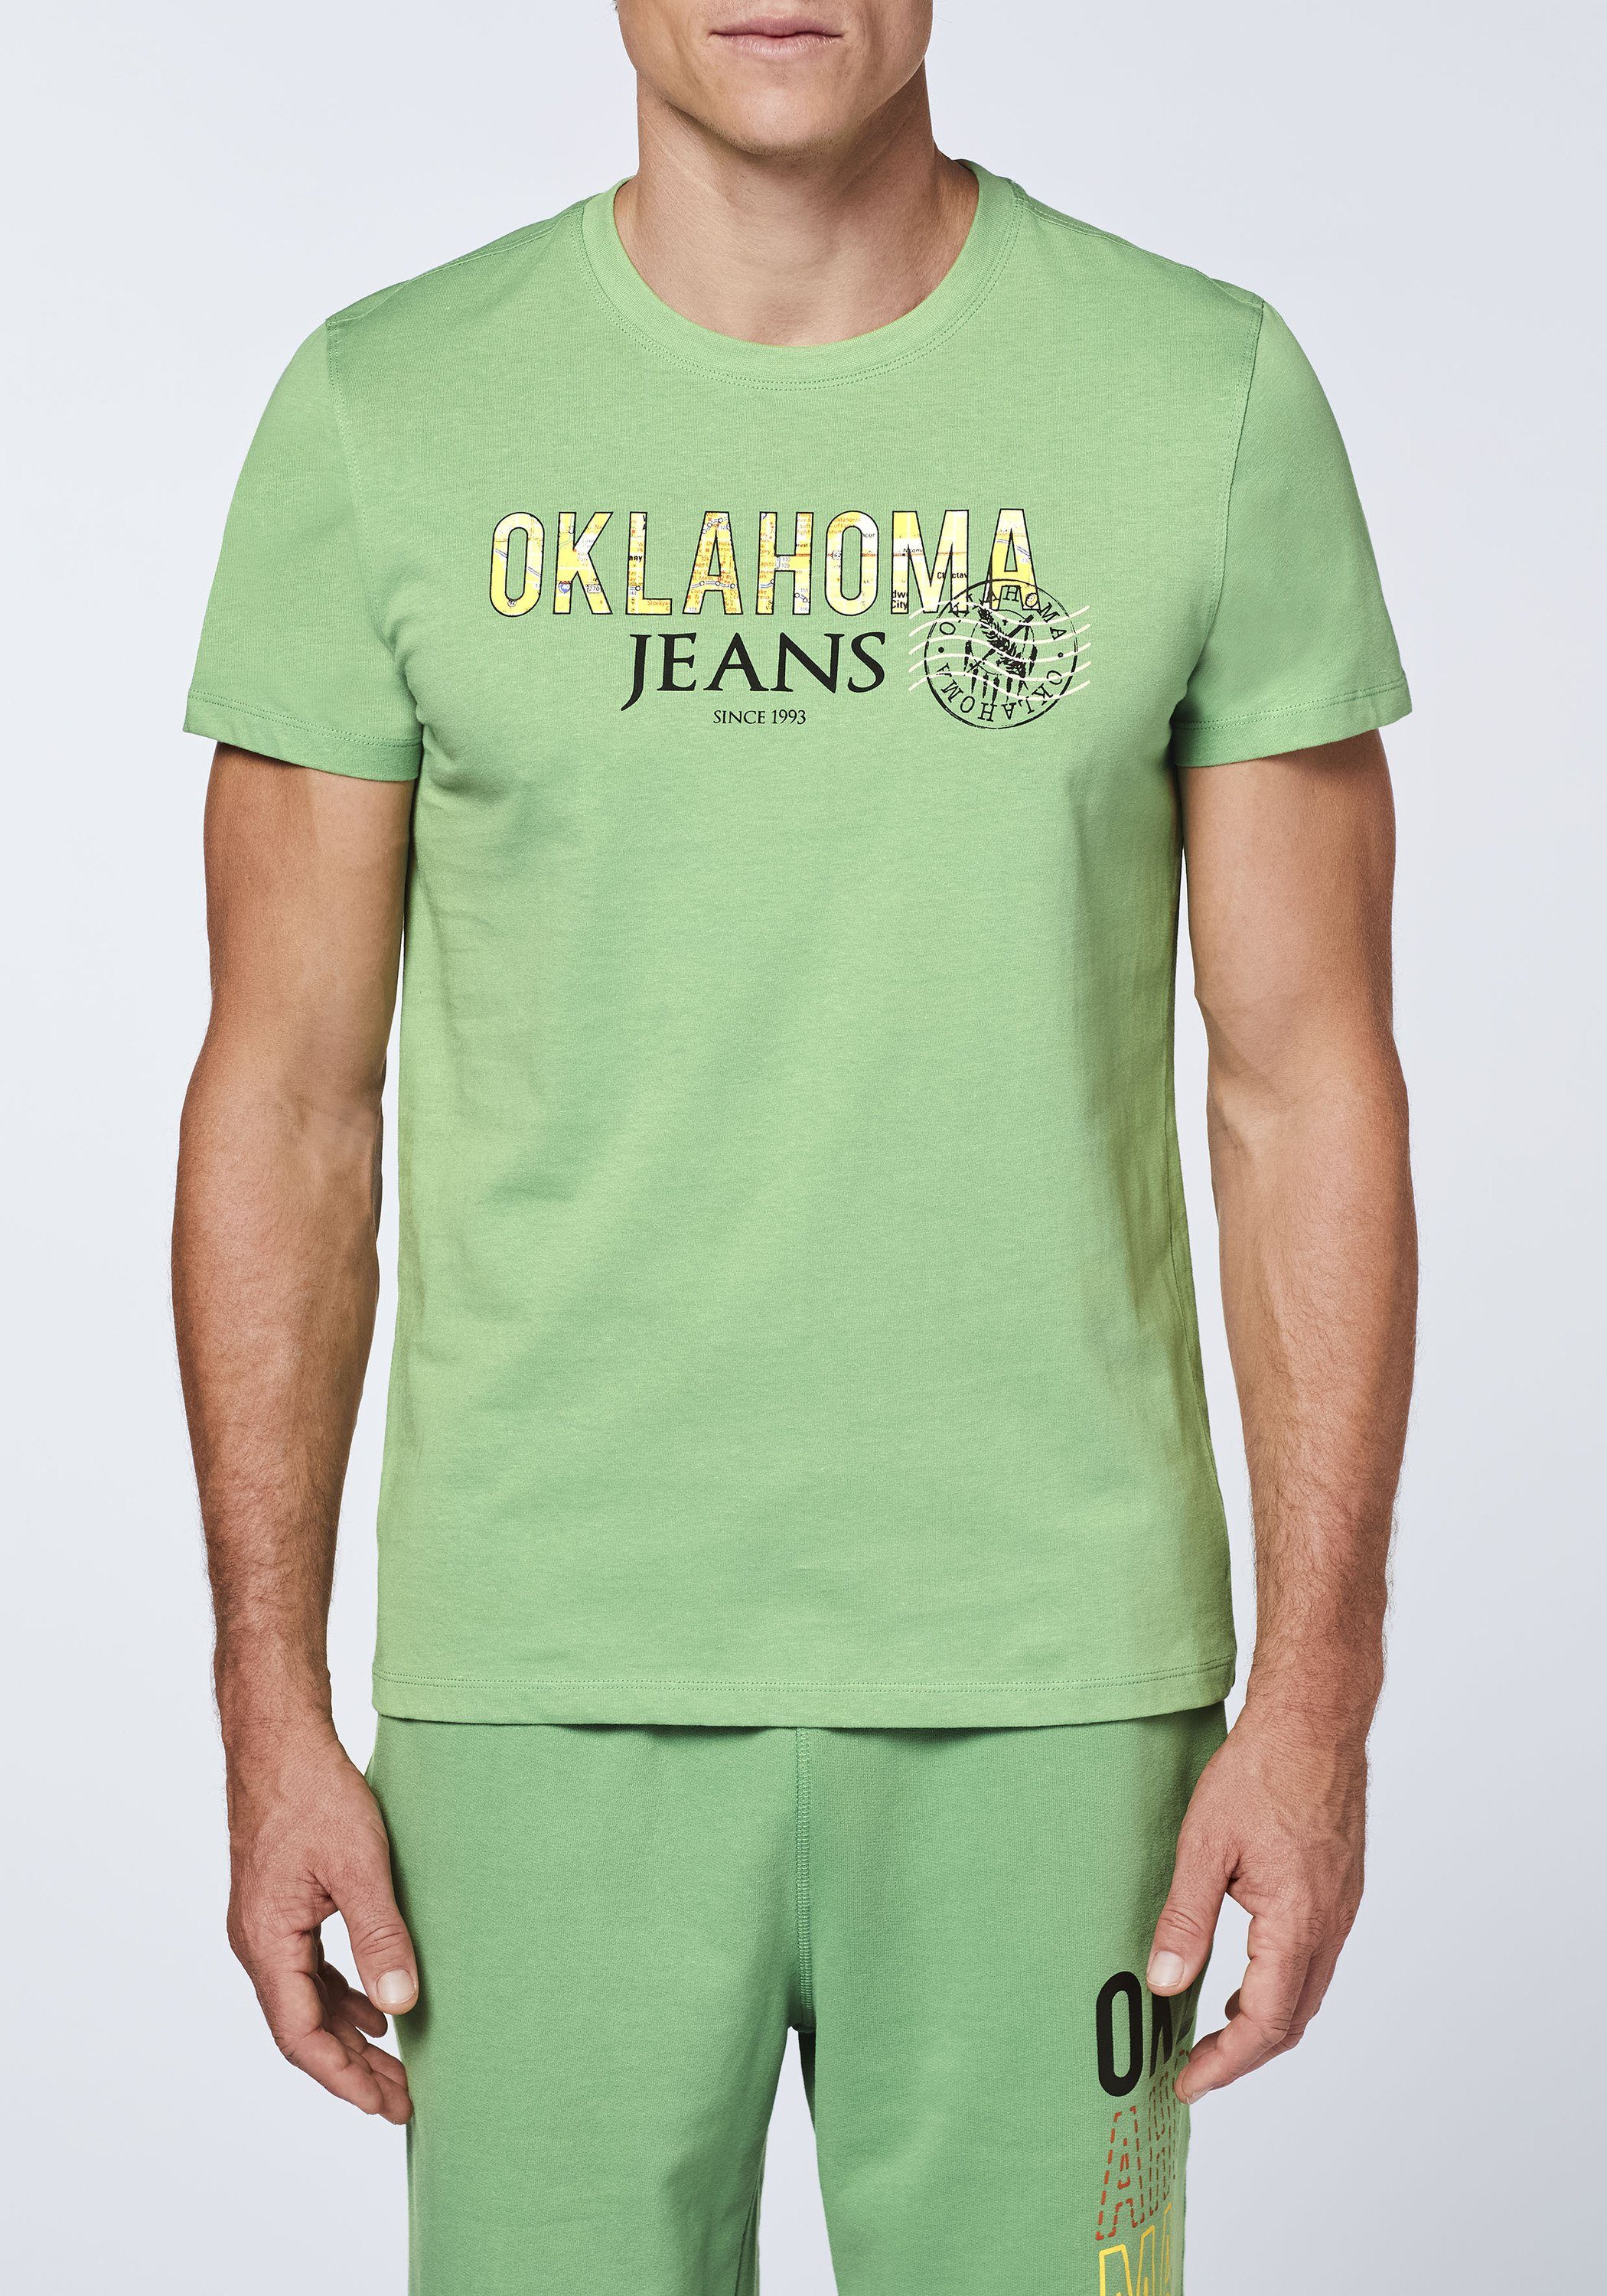 im Oklahoma Print-Shirt Shale Green mit Jeans Label-Print City-Map-Look 16-6116